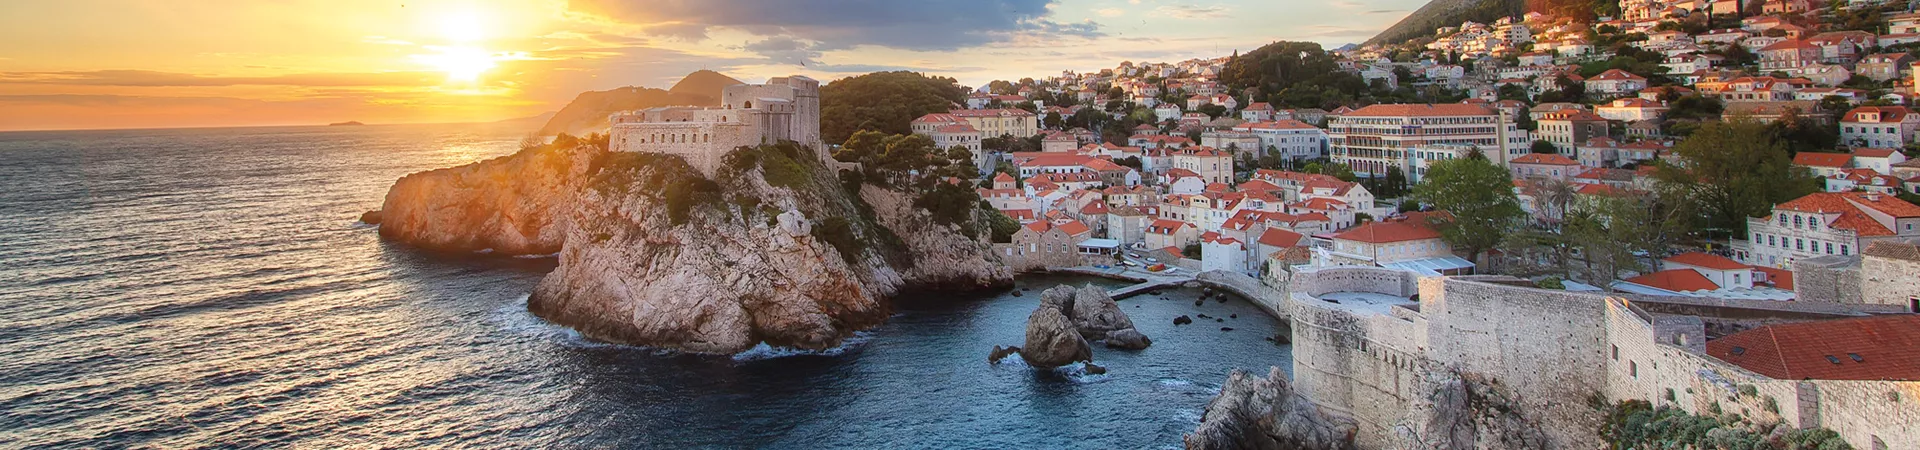 Sunset Over Dubrovnik Croatia